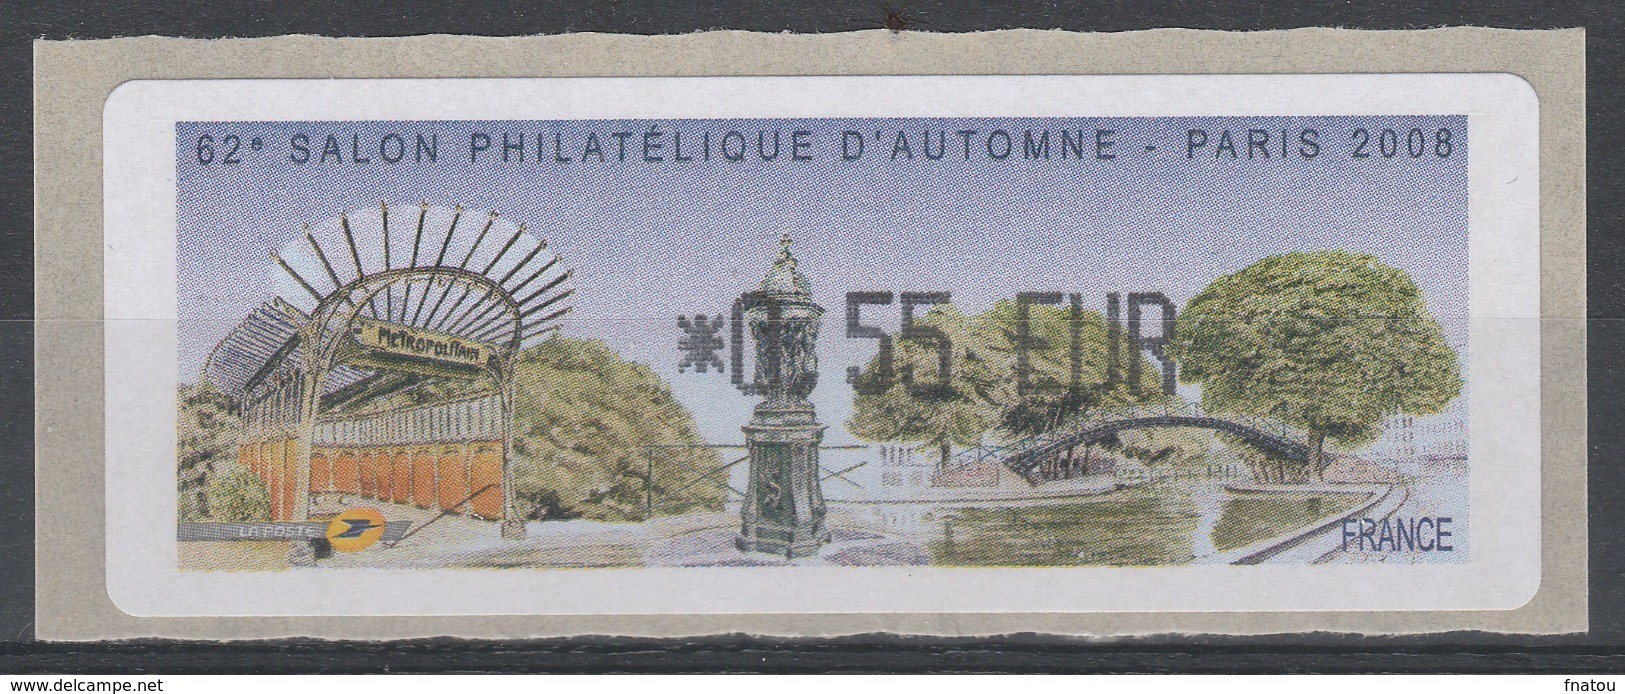 France, ATM Label, Philatelic Exhibition Paris, 2008, 0,55€, MNH VF - 1999-2009 Illustrated Franking Labels